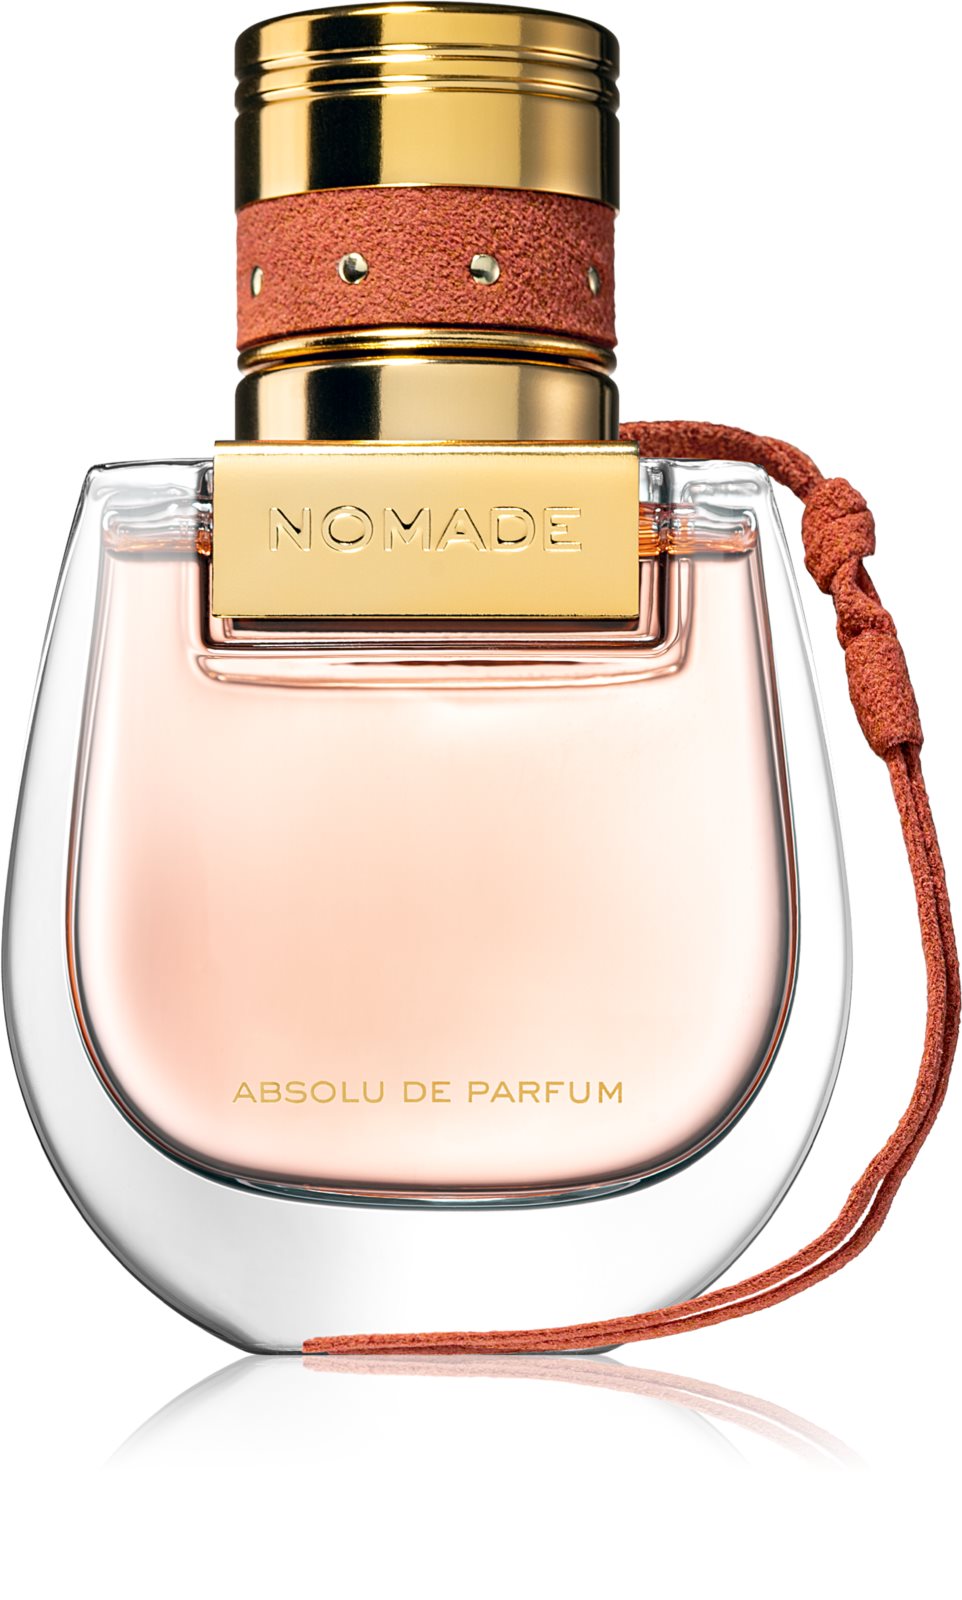 Chloé Nomade Absolu de Parfum 30 ml